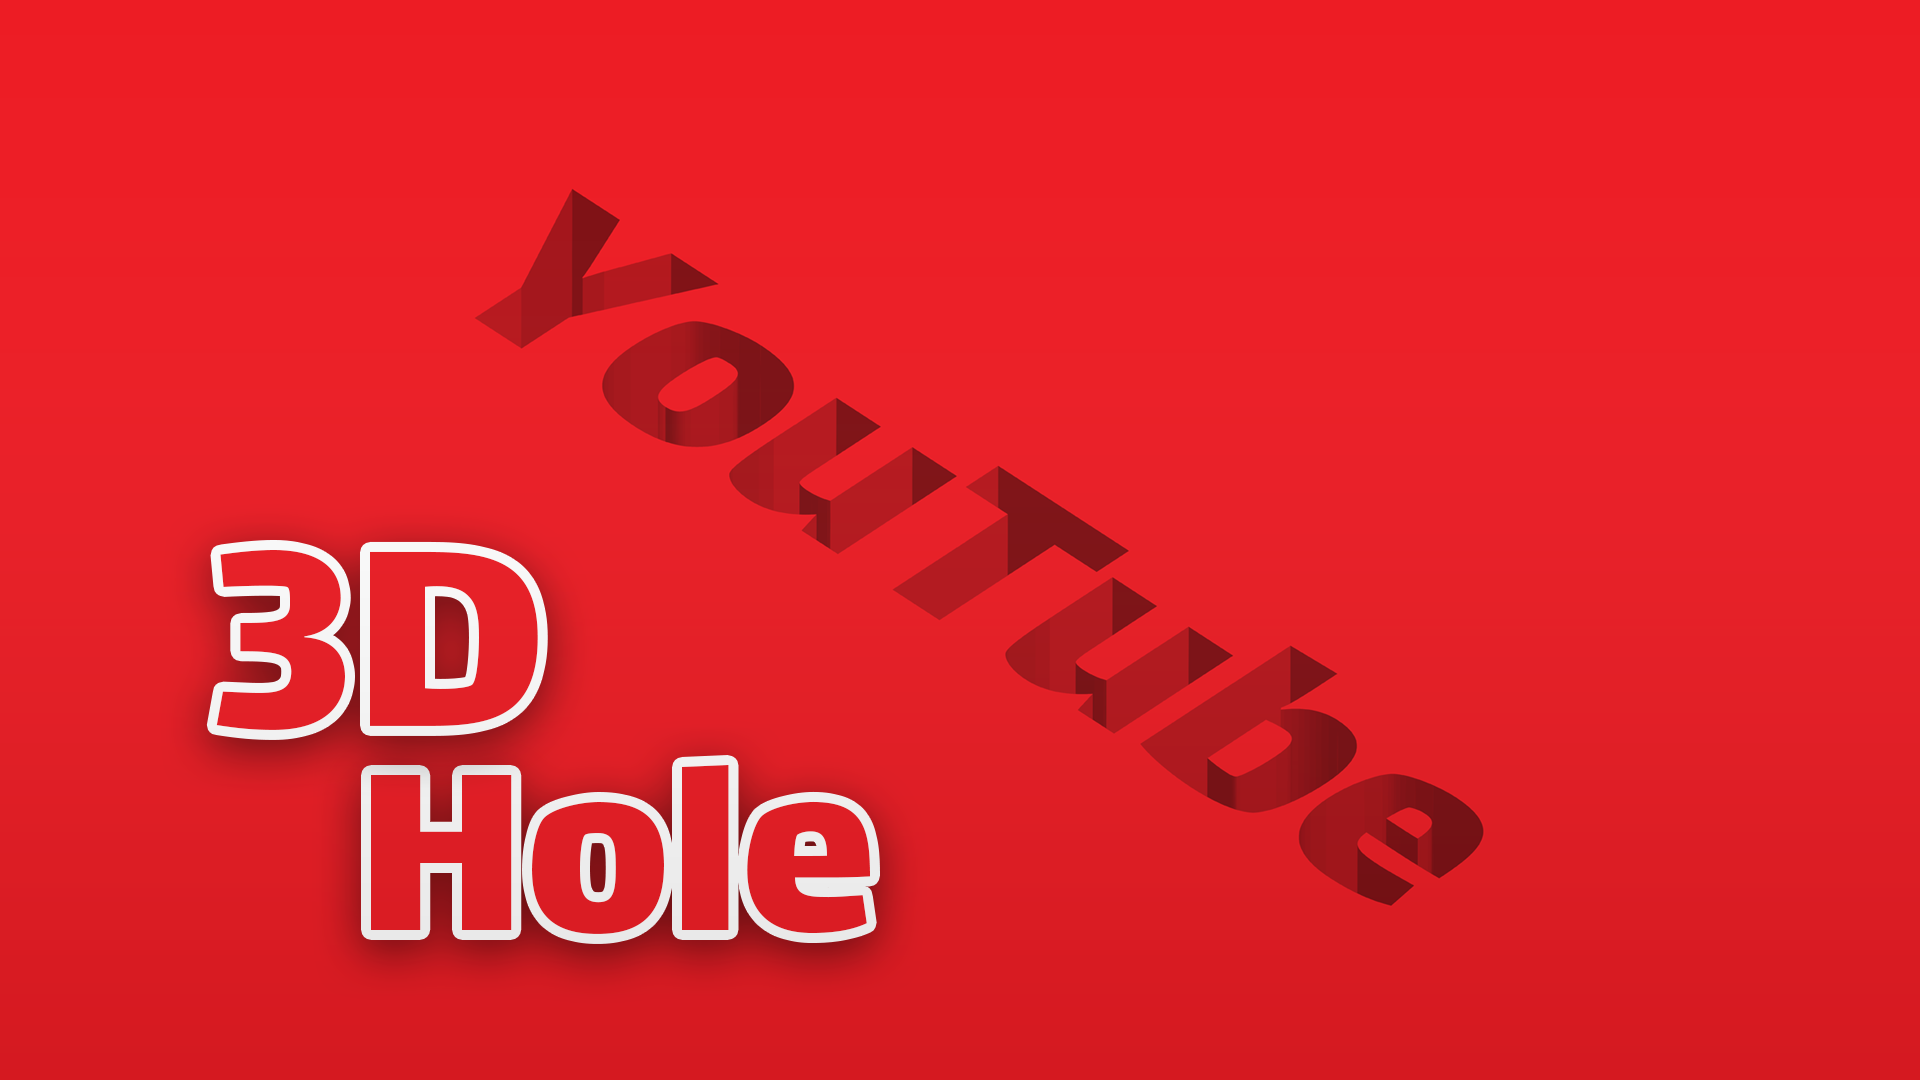 3D Hole Effect in Adobe Illustrator